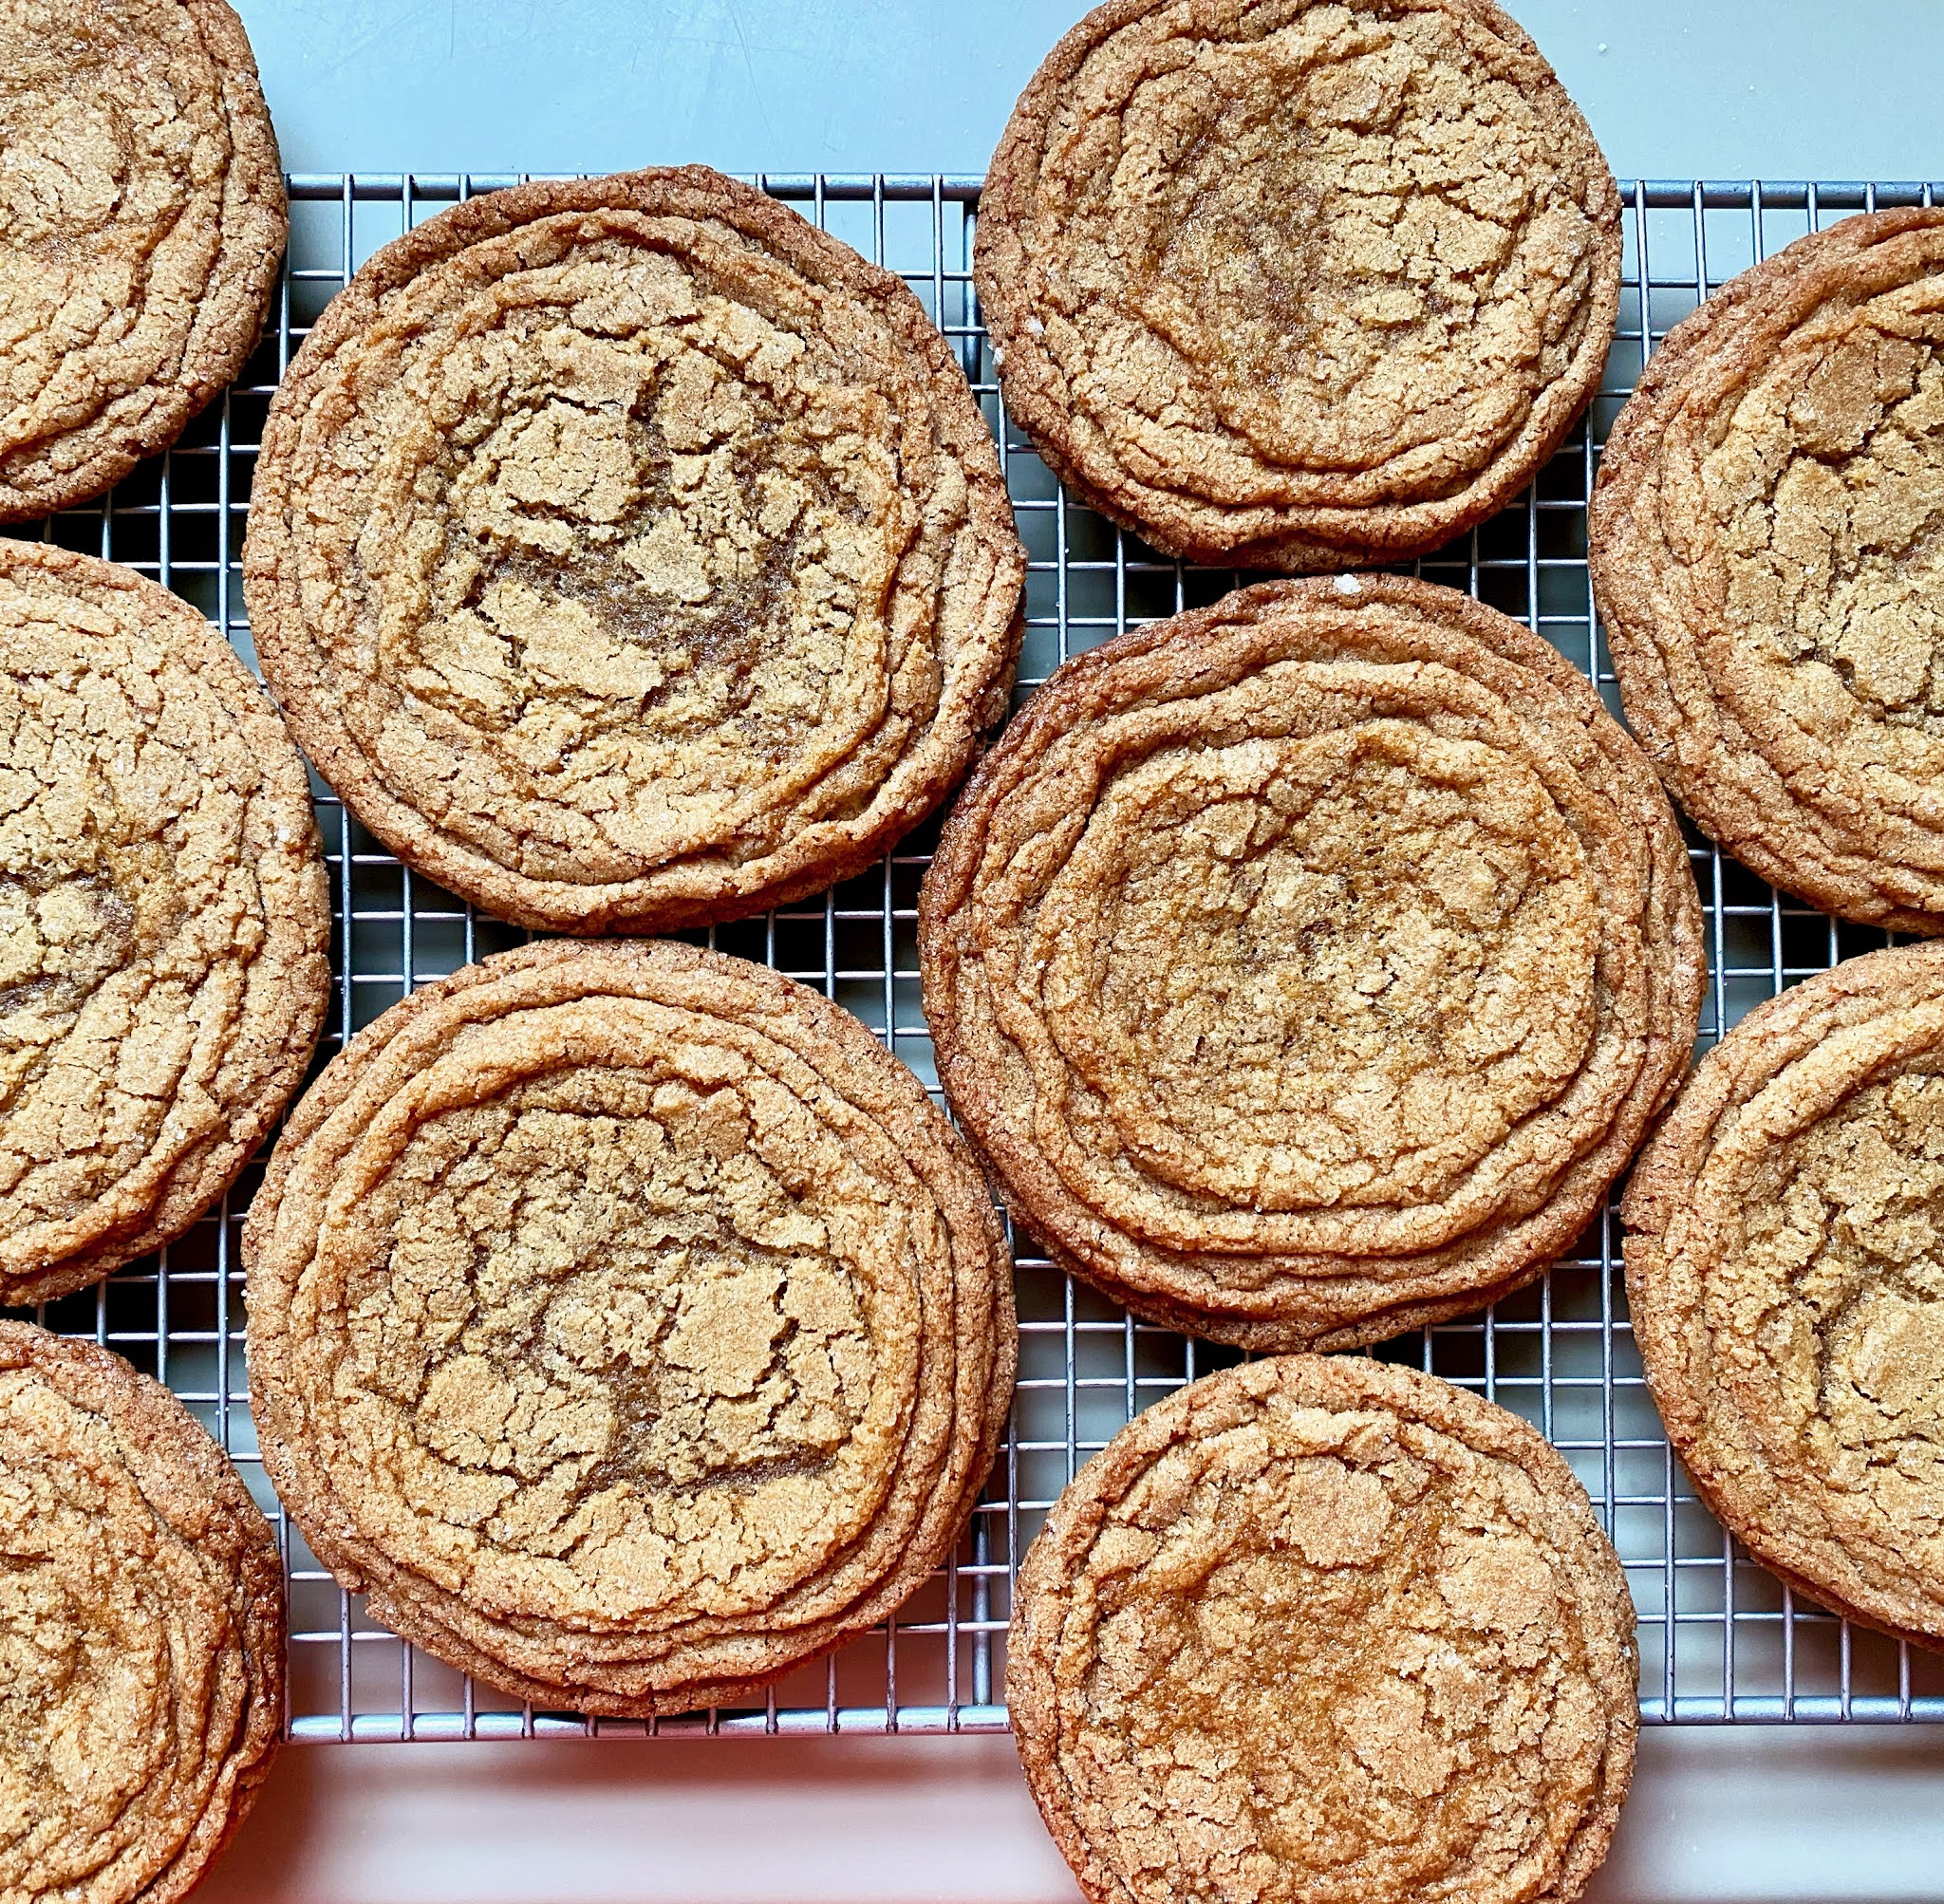 I Tried Sarah Kieffer's Pan-Banging Cookie Recipe